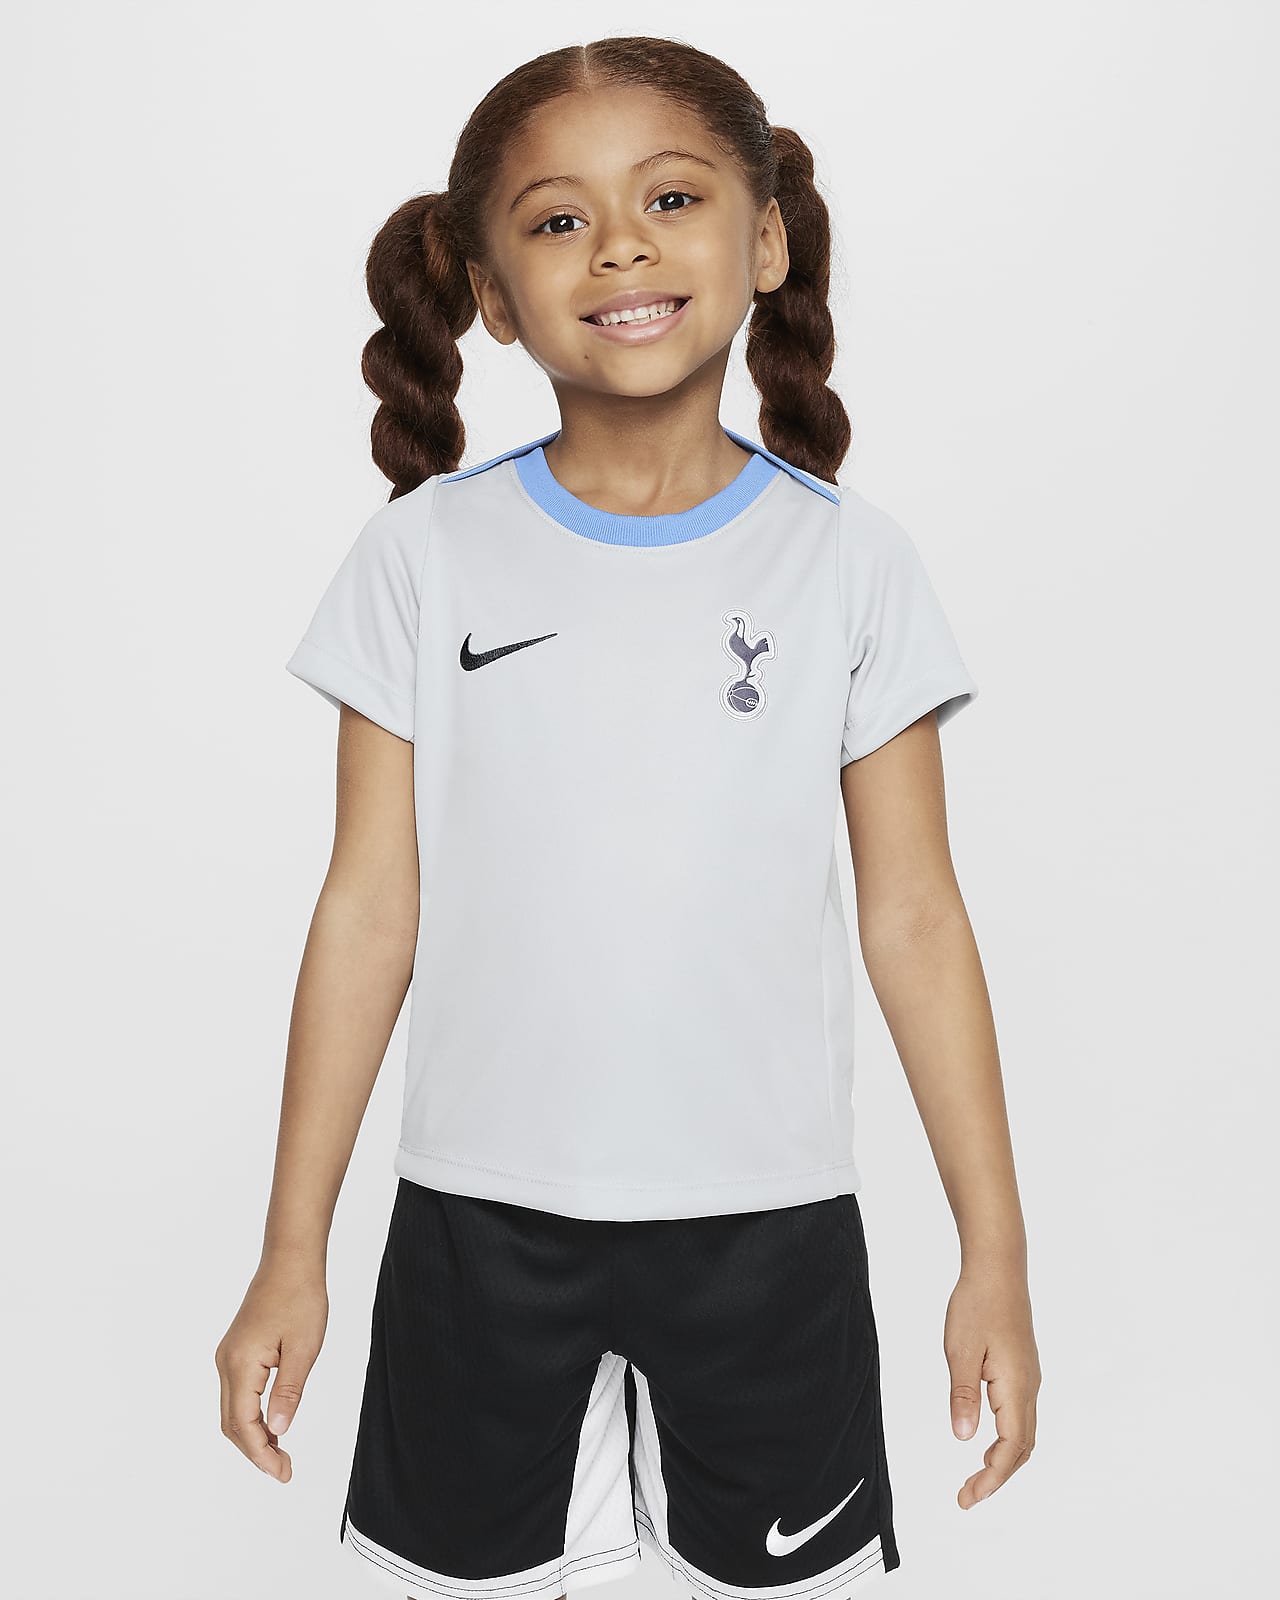 Tottenham Hotspur Academy Pro Younger Kids' Nike Dri-FIT Football Short-Sleeve Top